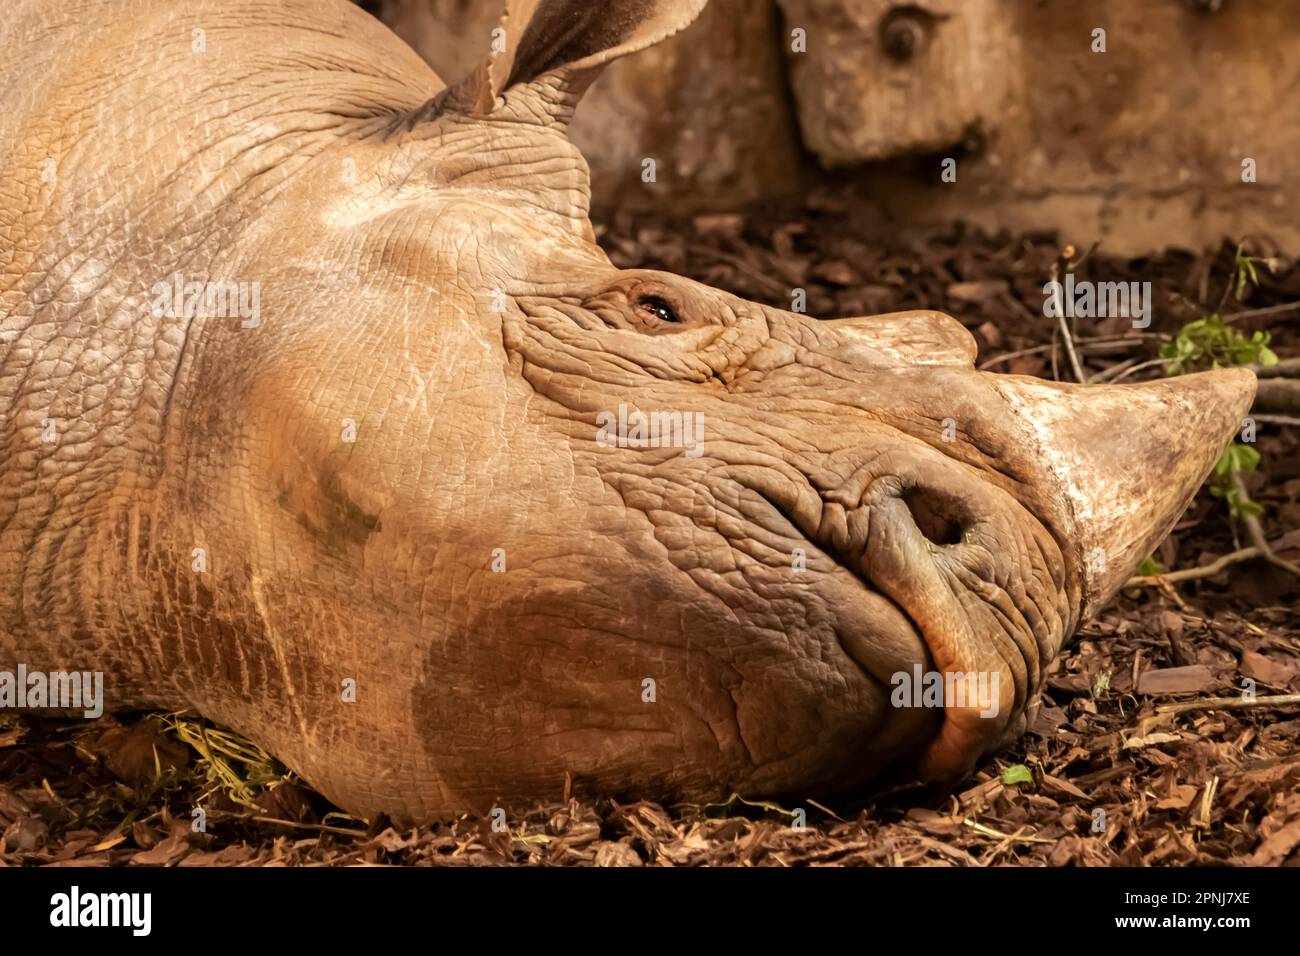 Black Rhinoceros. IUCN Conservation Status - Critically Endangered Stock Photo